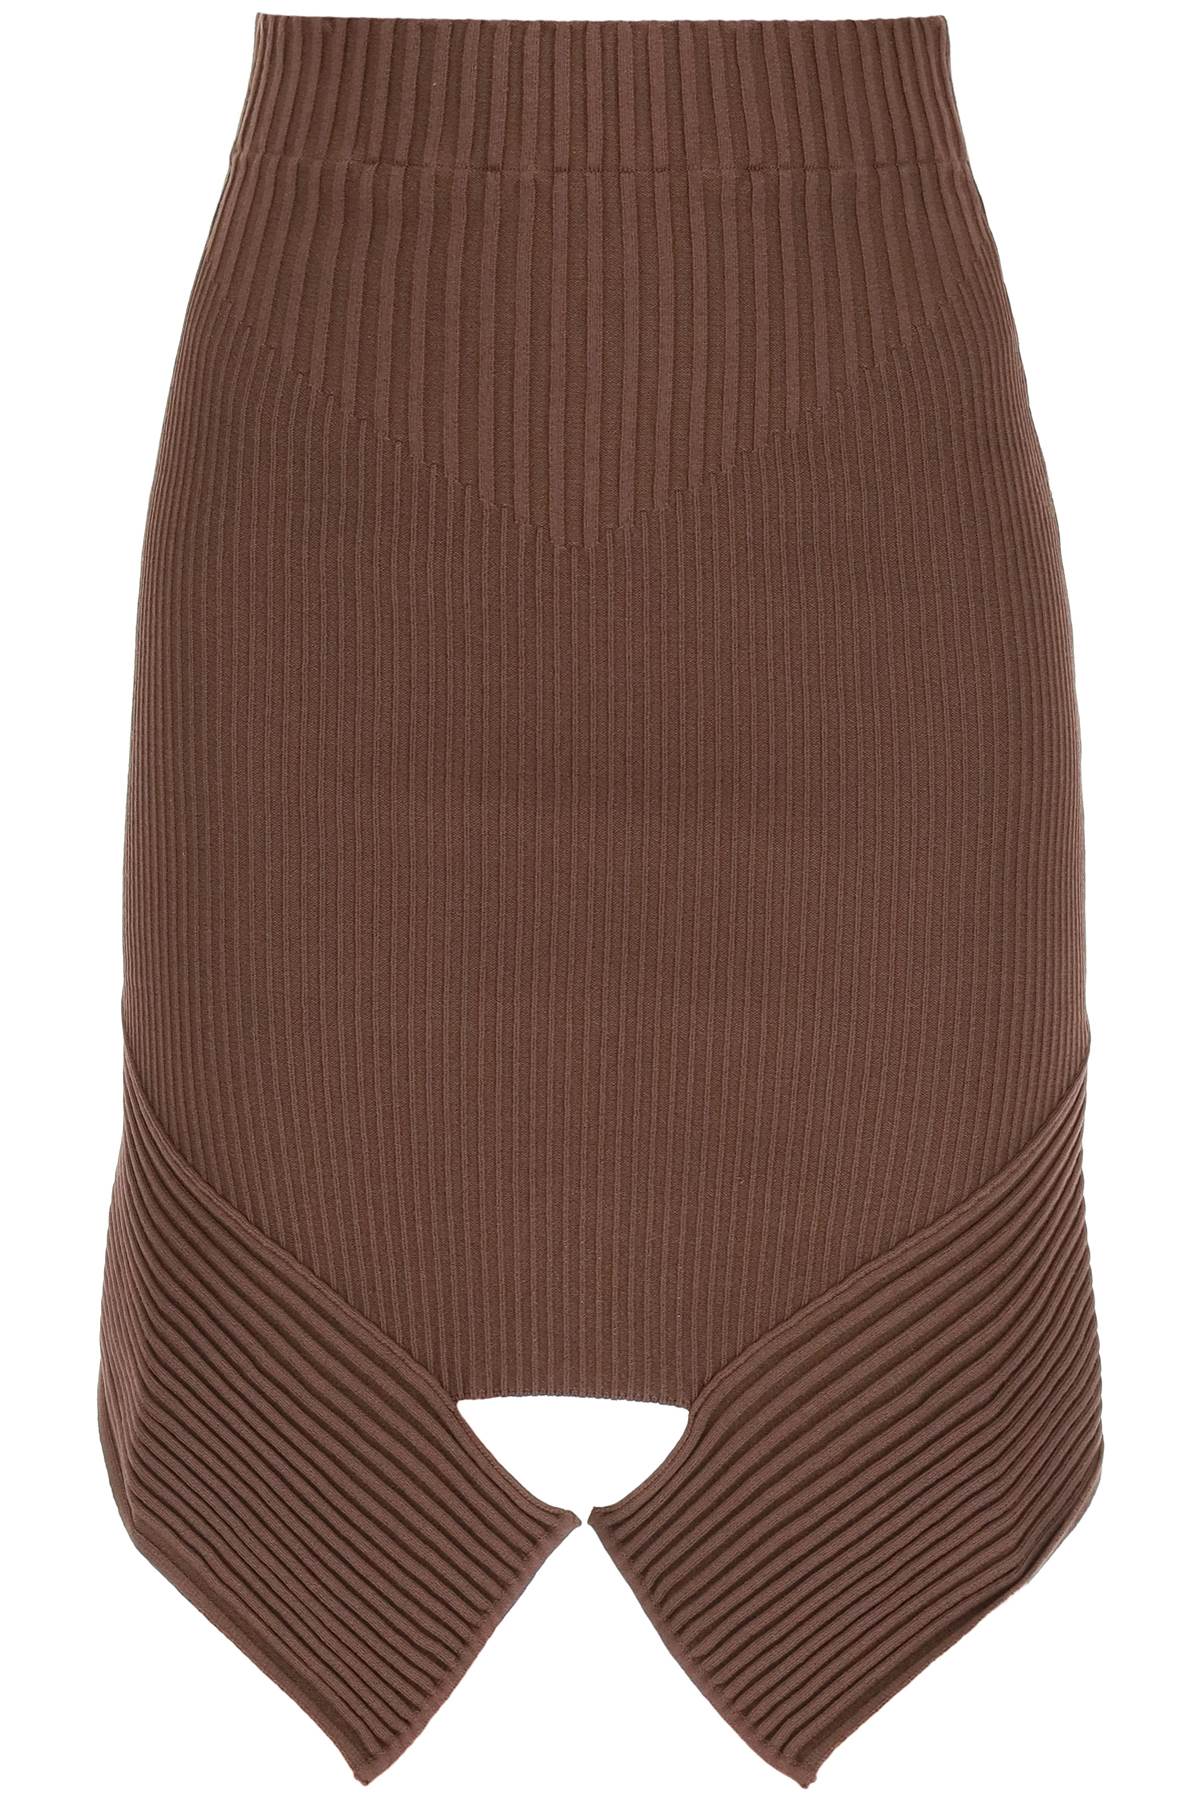 ANDREADAMO Asymmetric Rib Knit Mini Skirt